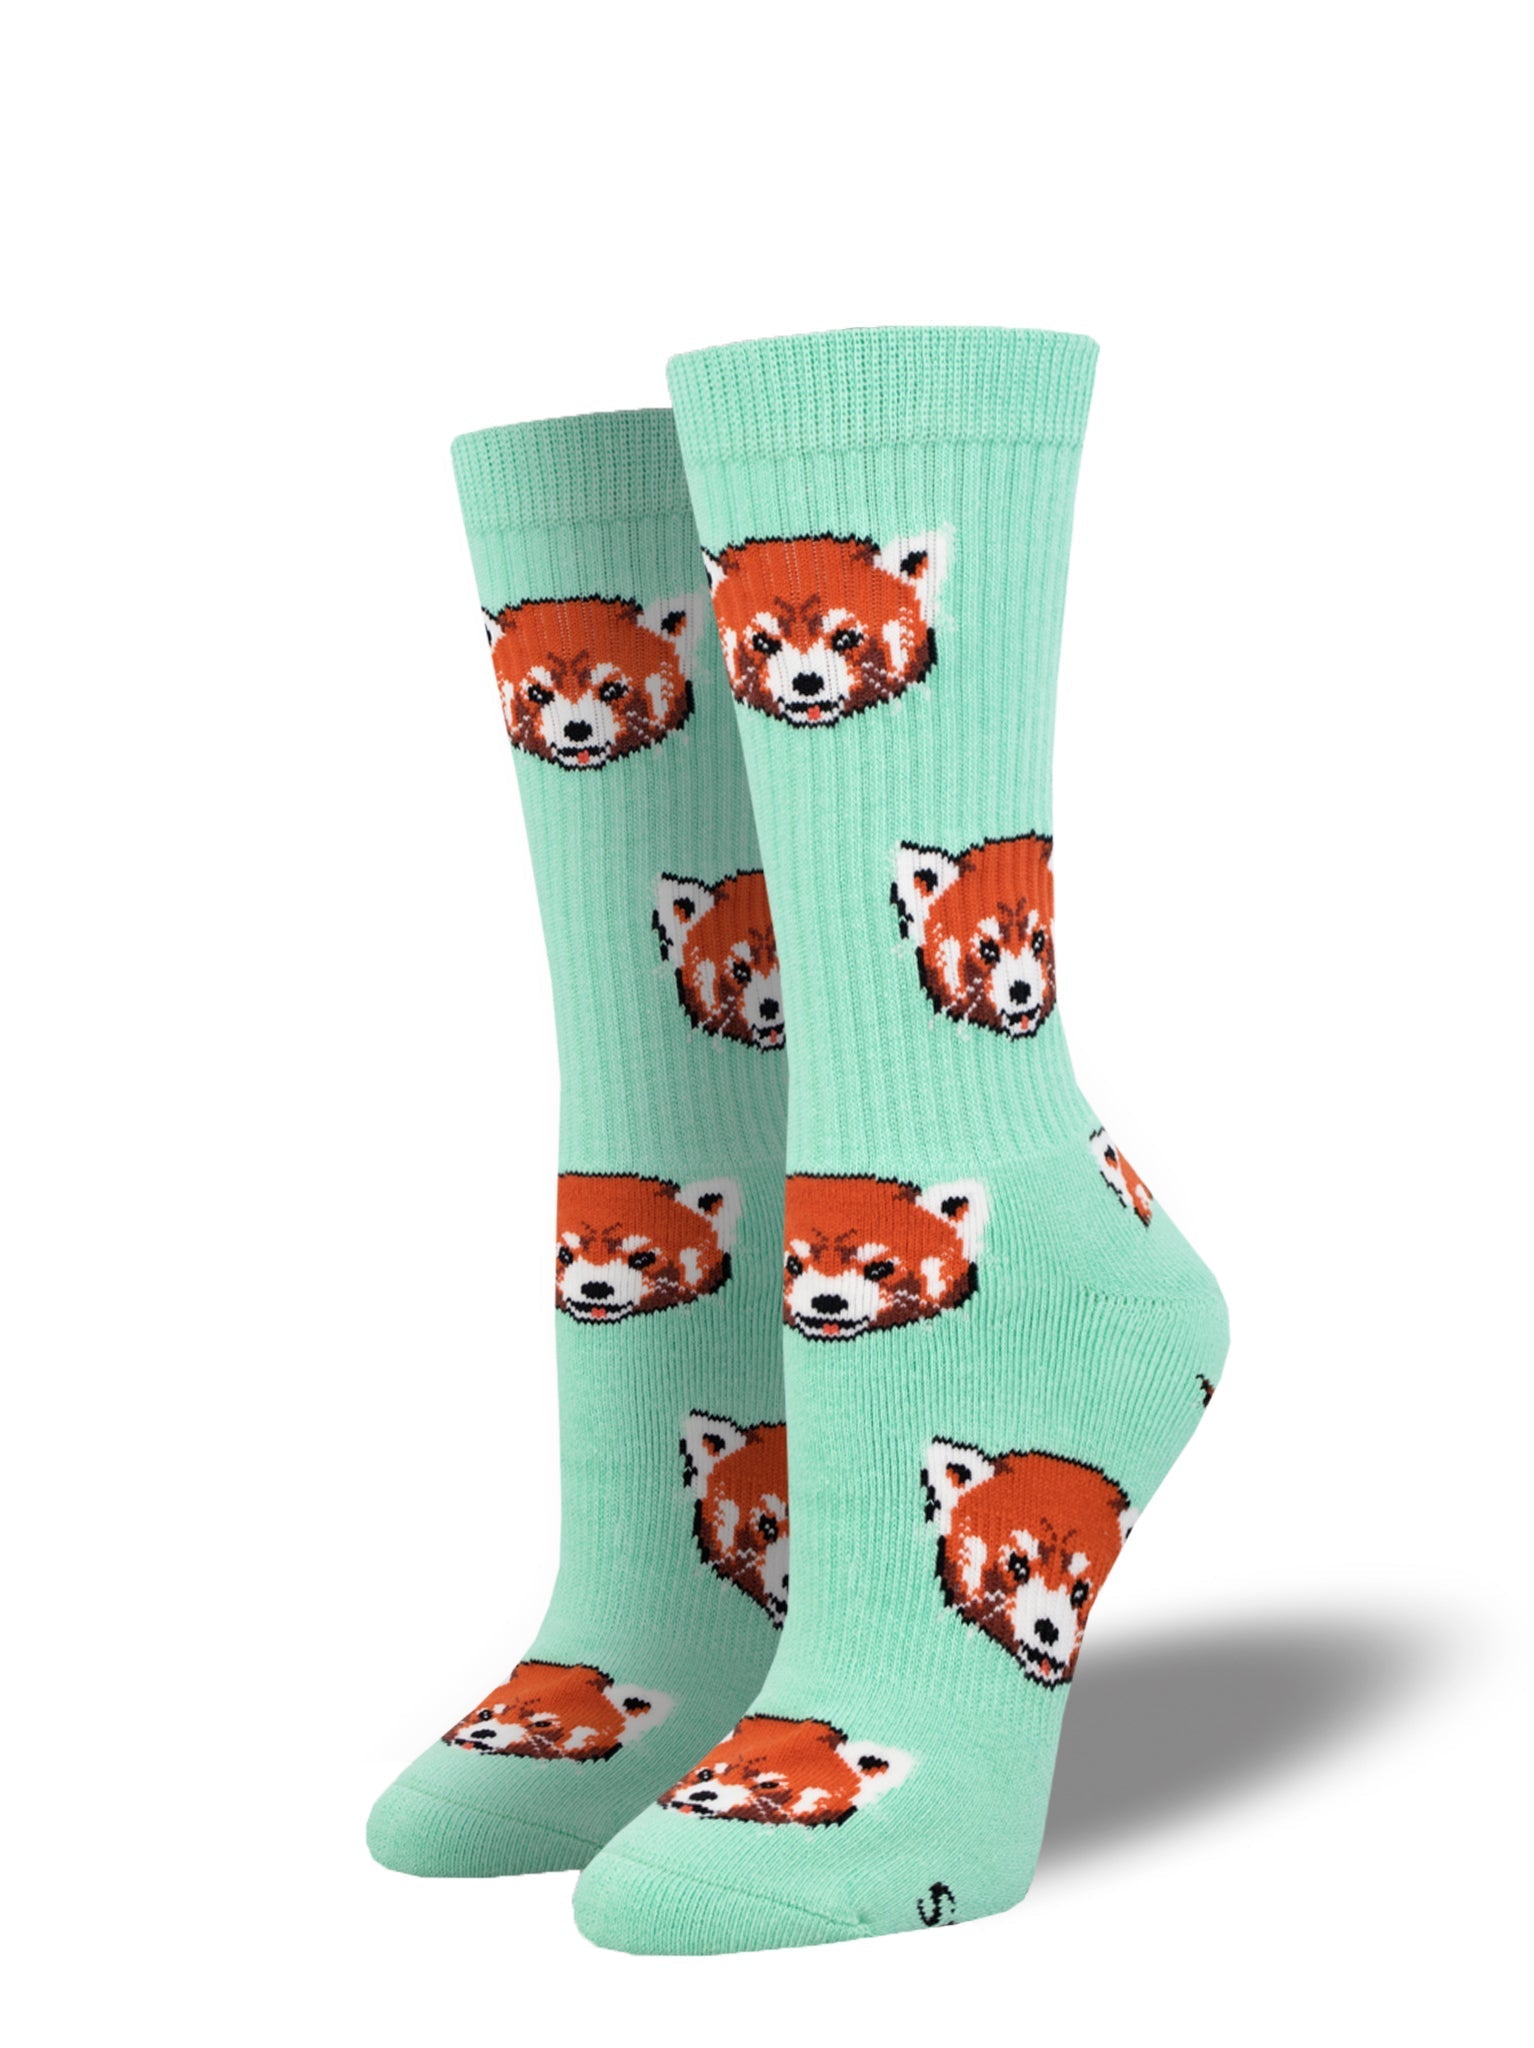 Athletic Novelty Crew "Red Panda" Socks